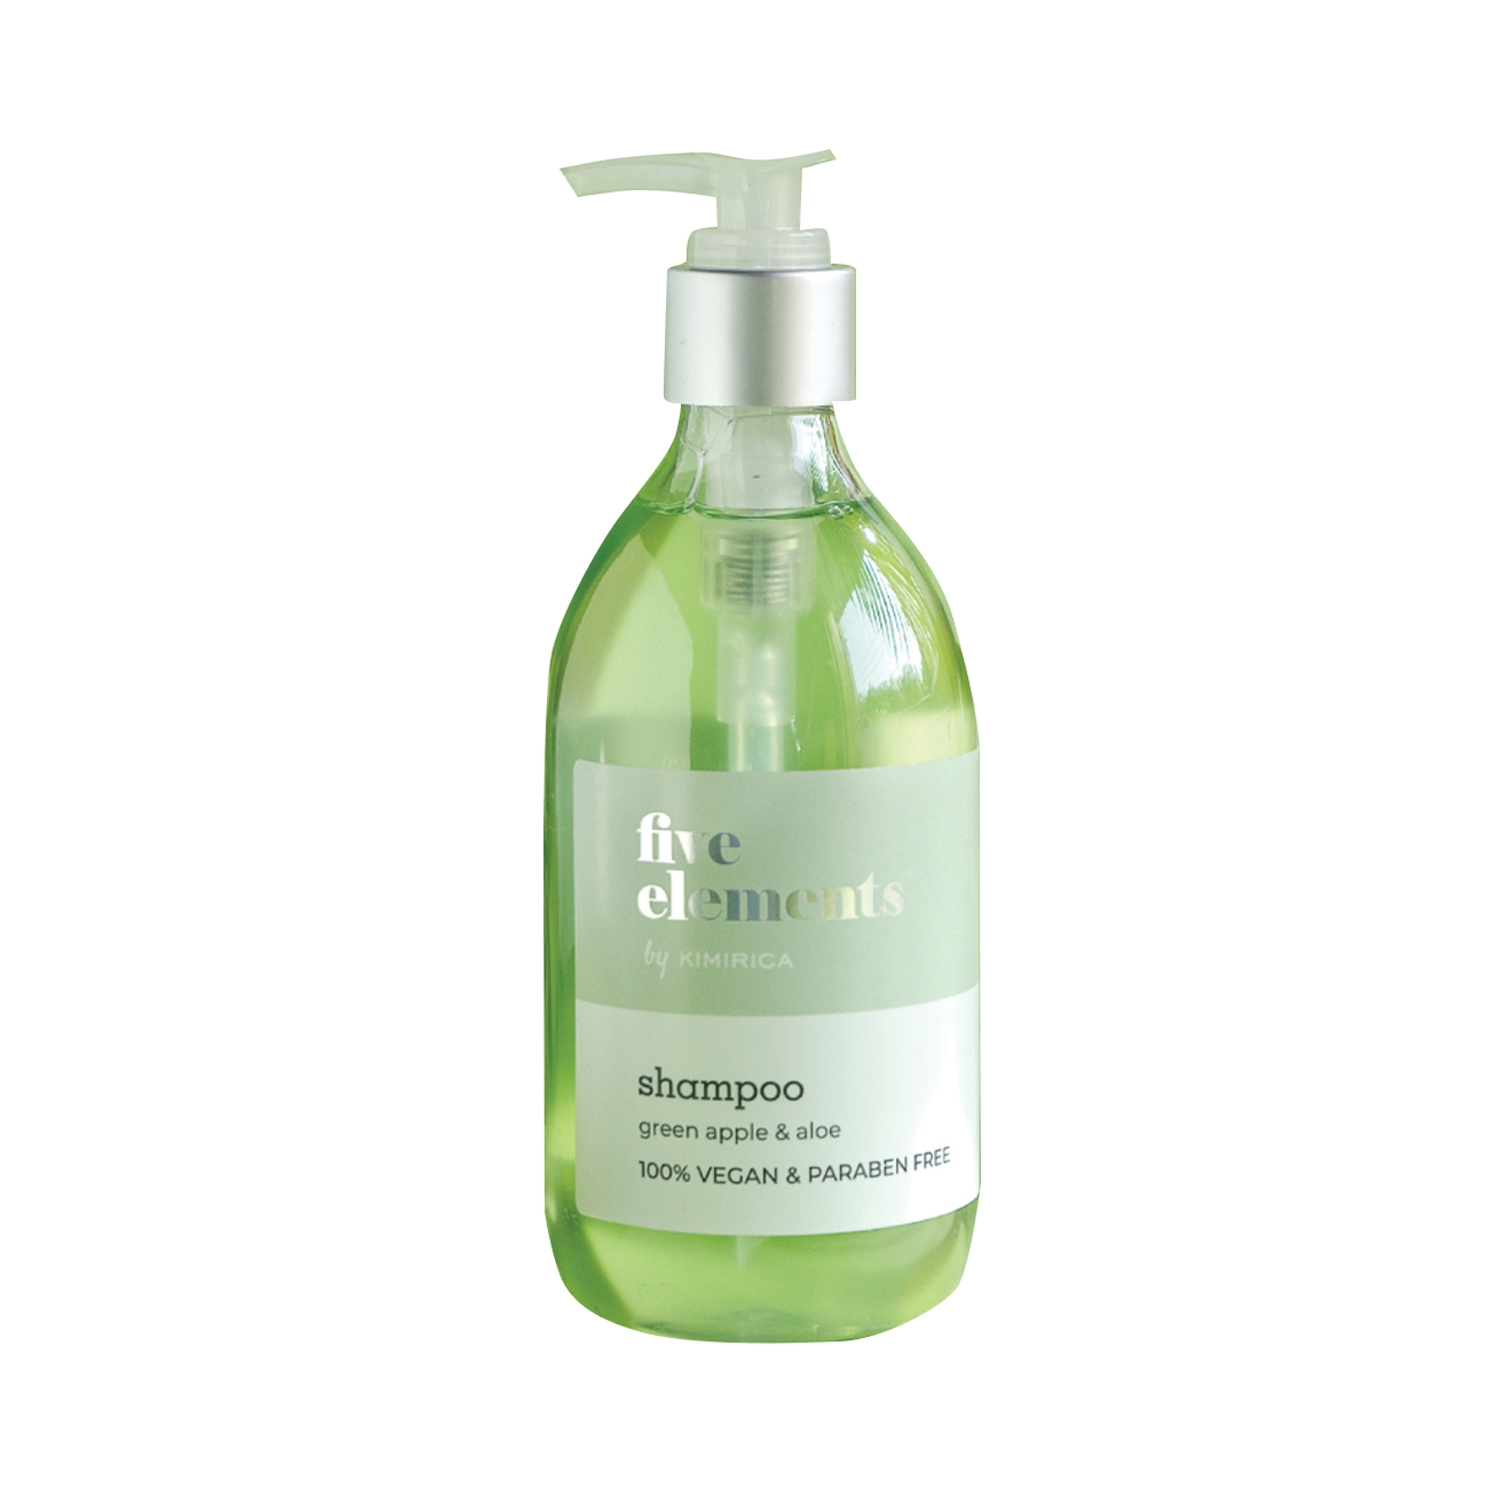 Kimirica | Kimirica Five Elements Green Apple & Aloe Shampoo for Soft & Smooth Hair Paraben & SLS Free (300 ml)